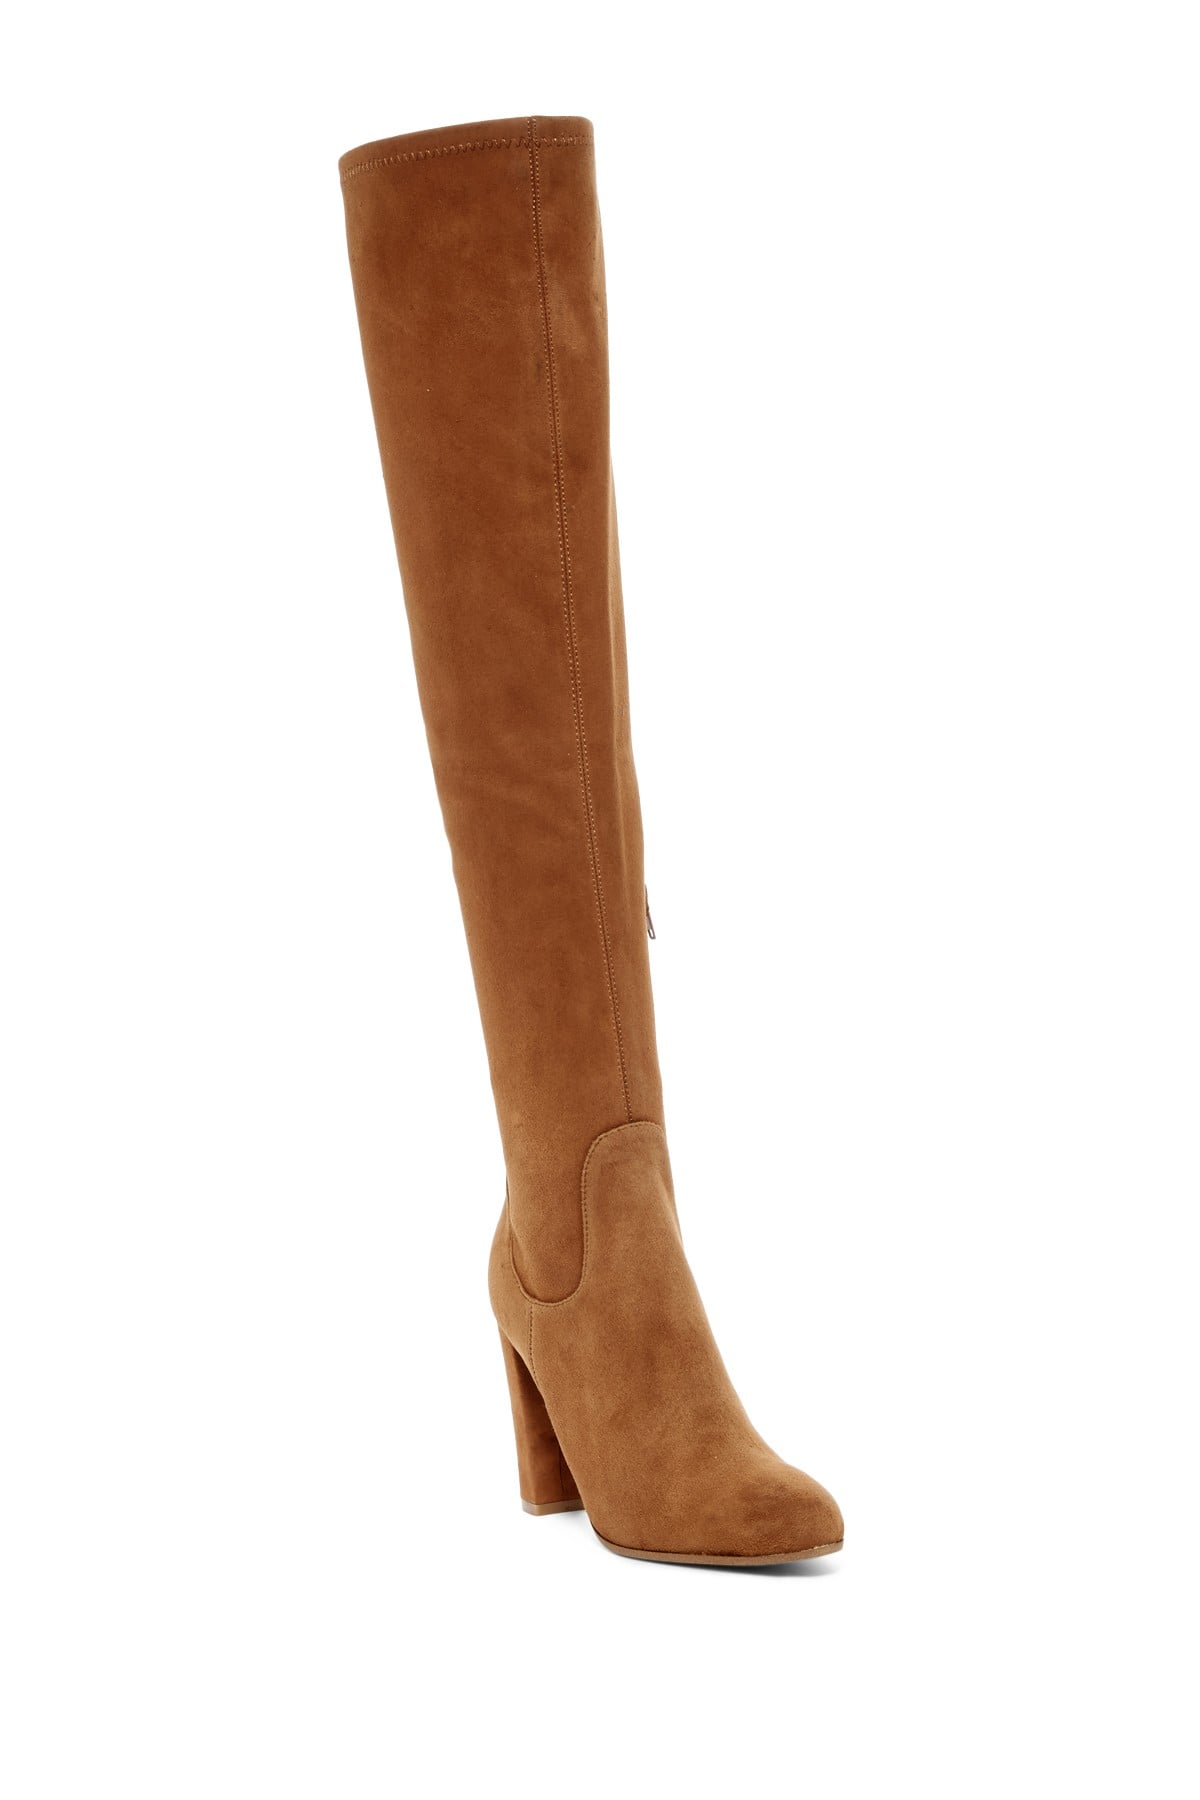 Tony Taj Thigh-High Boot | Rosie Huntington-Whiteley's Boots Have — That's a Game Changer | POPSUGAR Fashion Photo